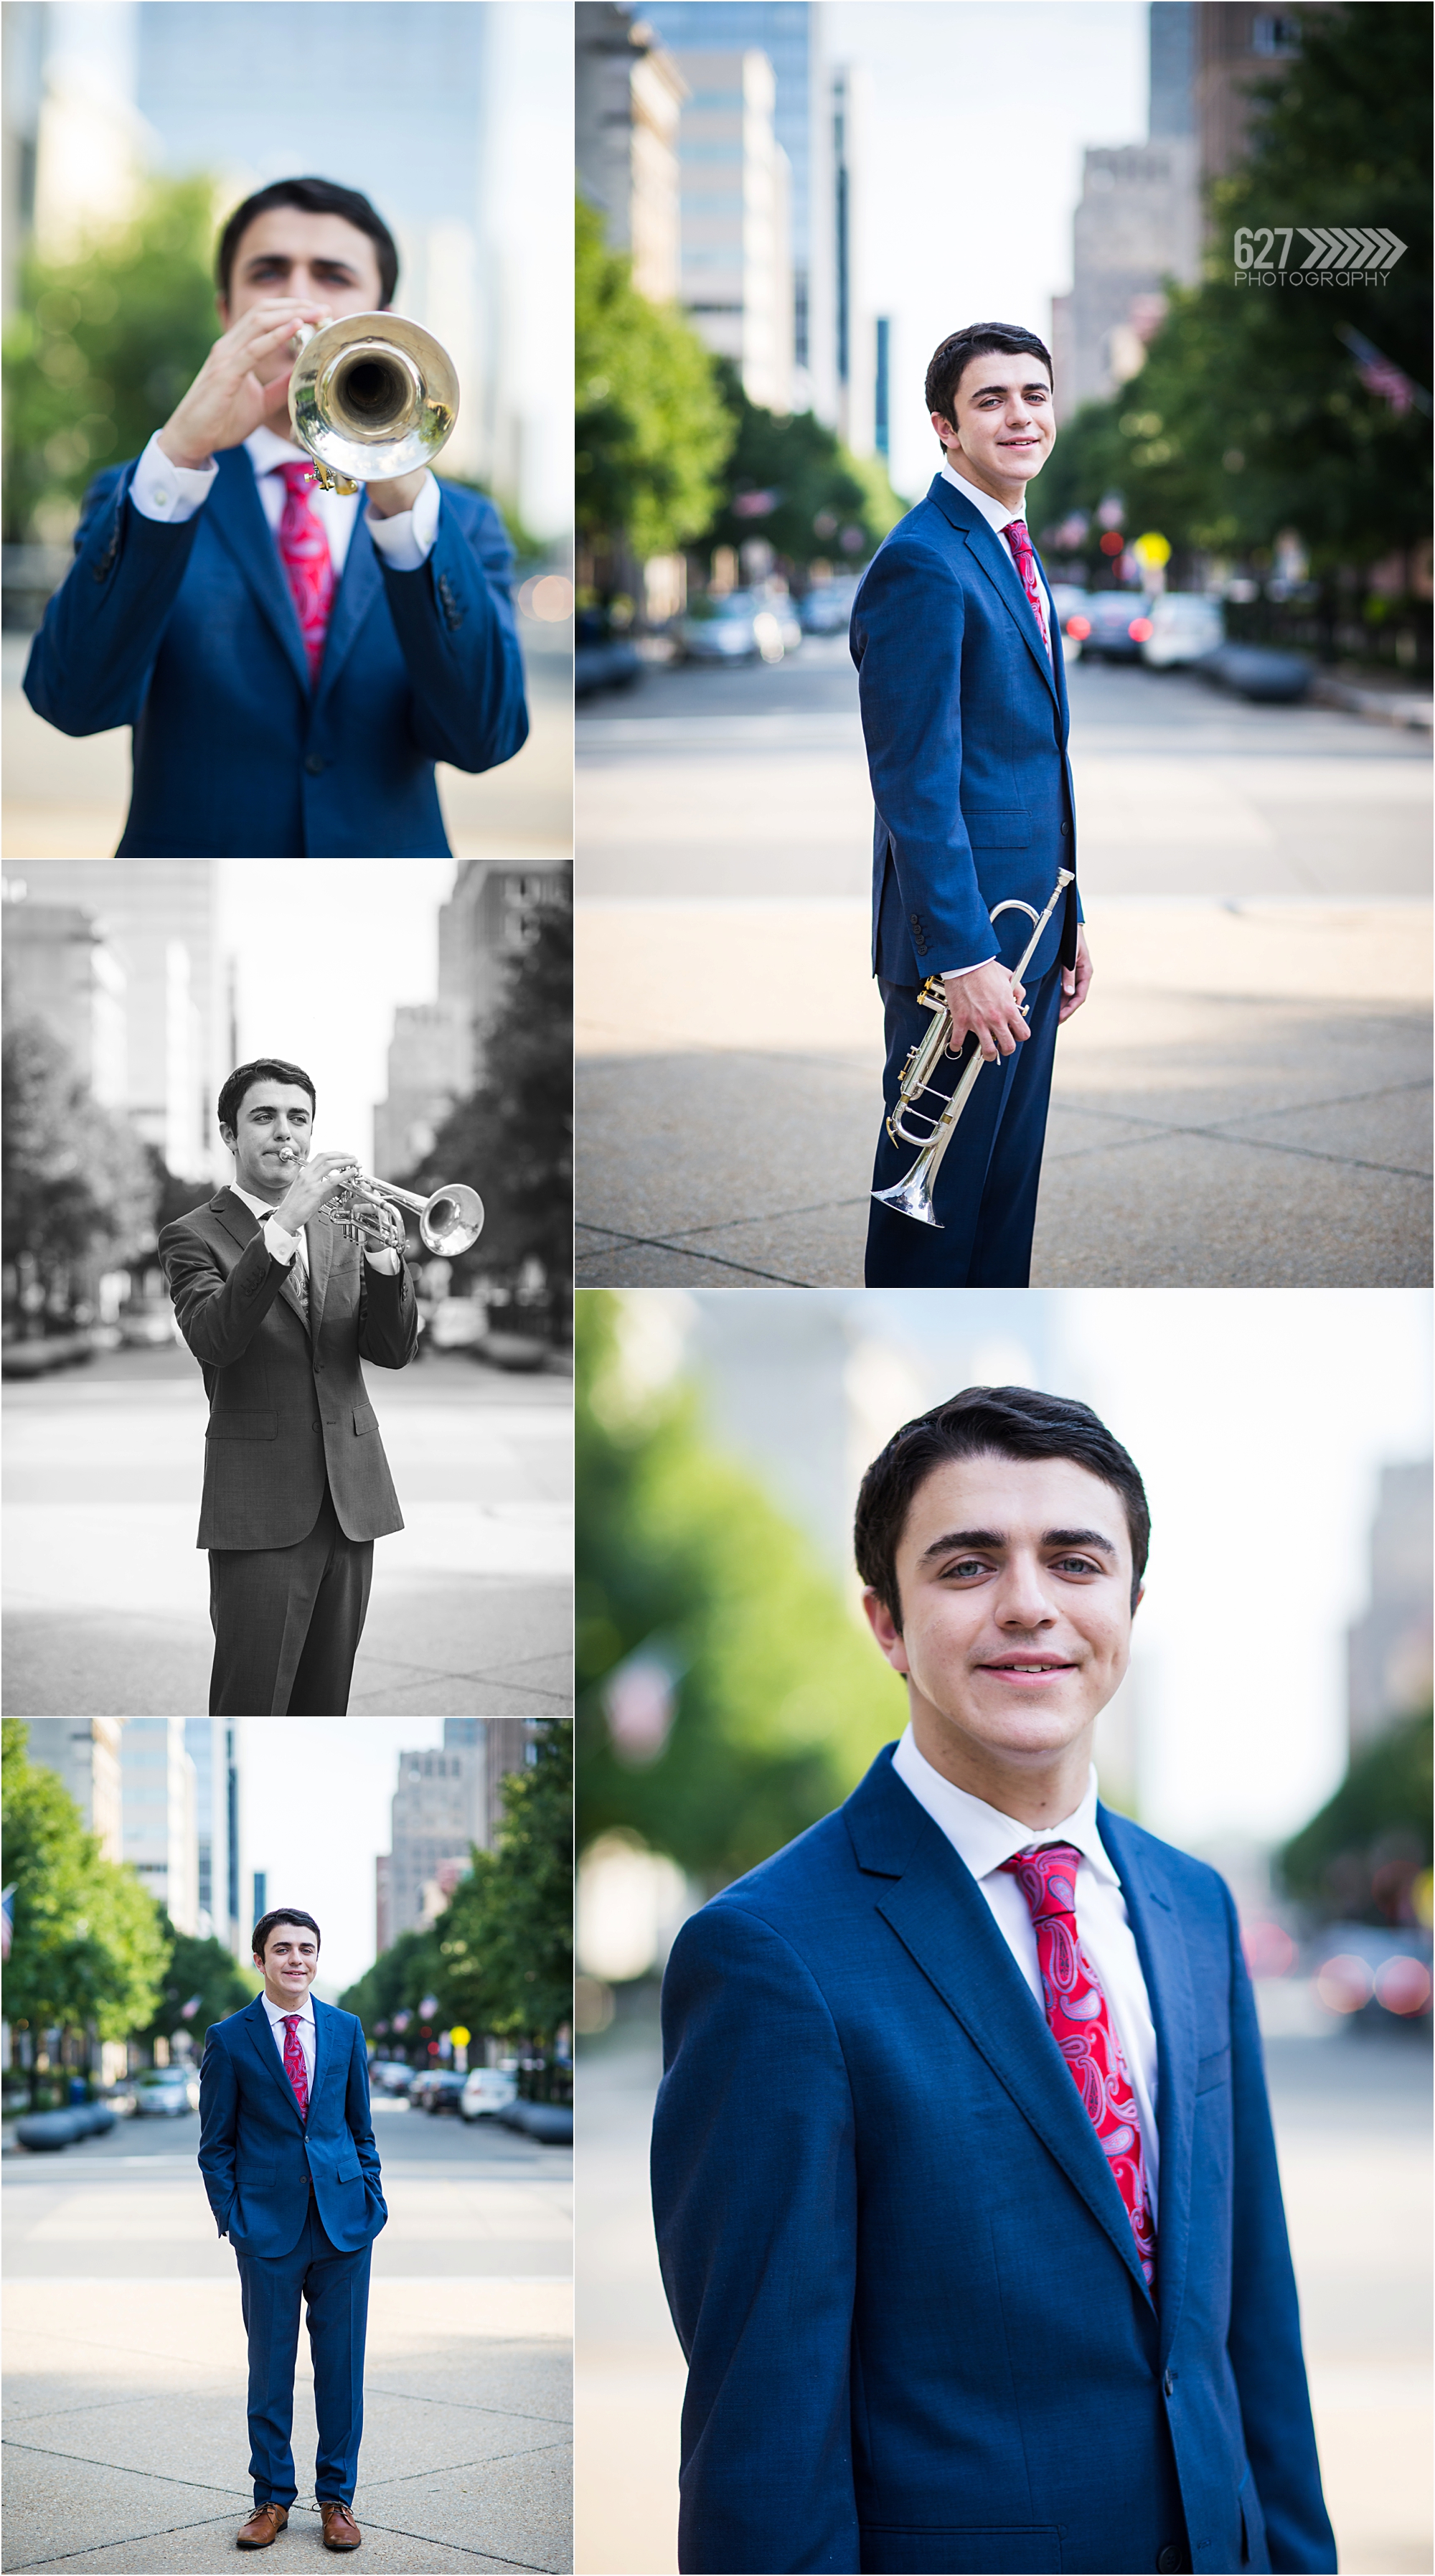 Cary Academy Senior Portraits - senior boy with trombone downtown